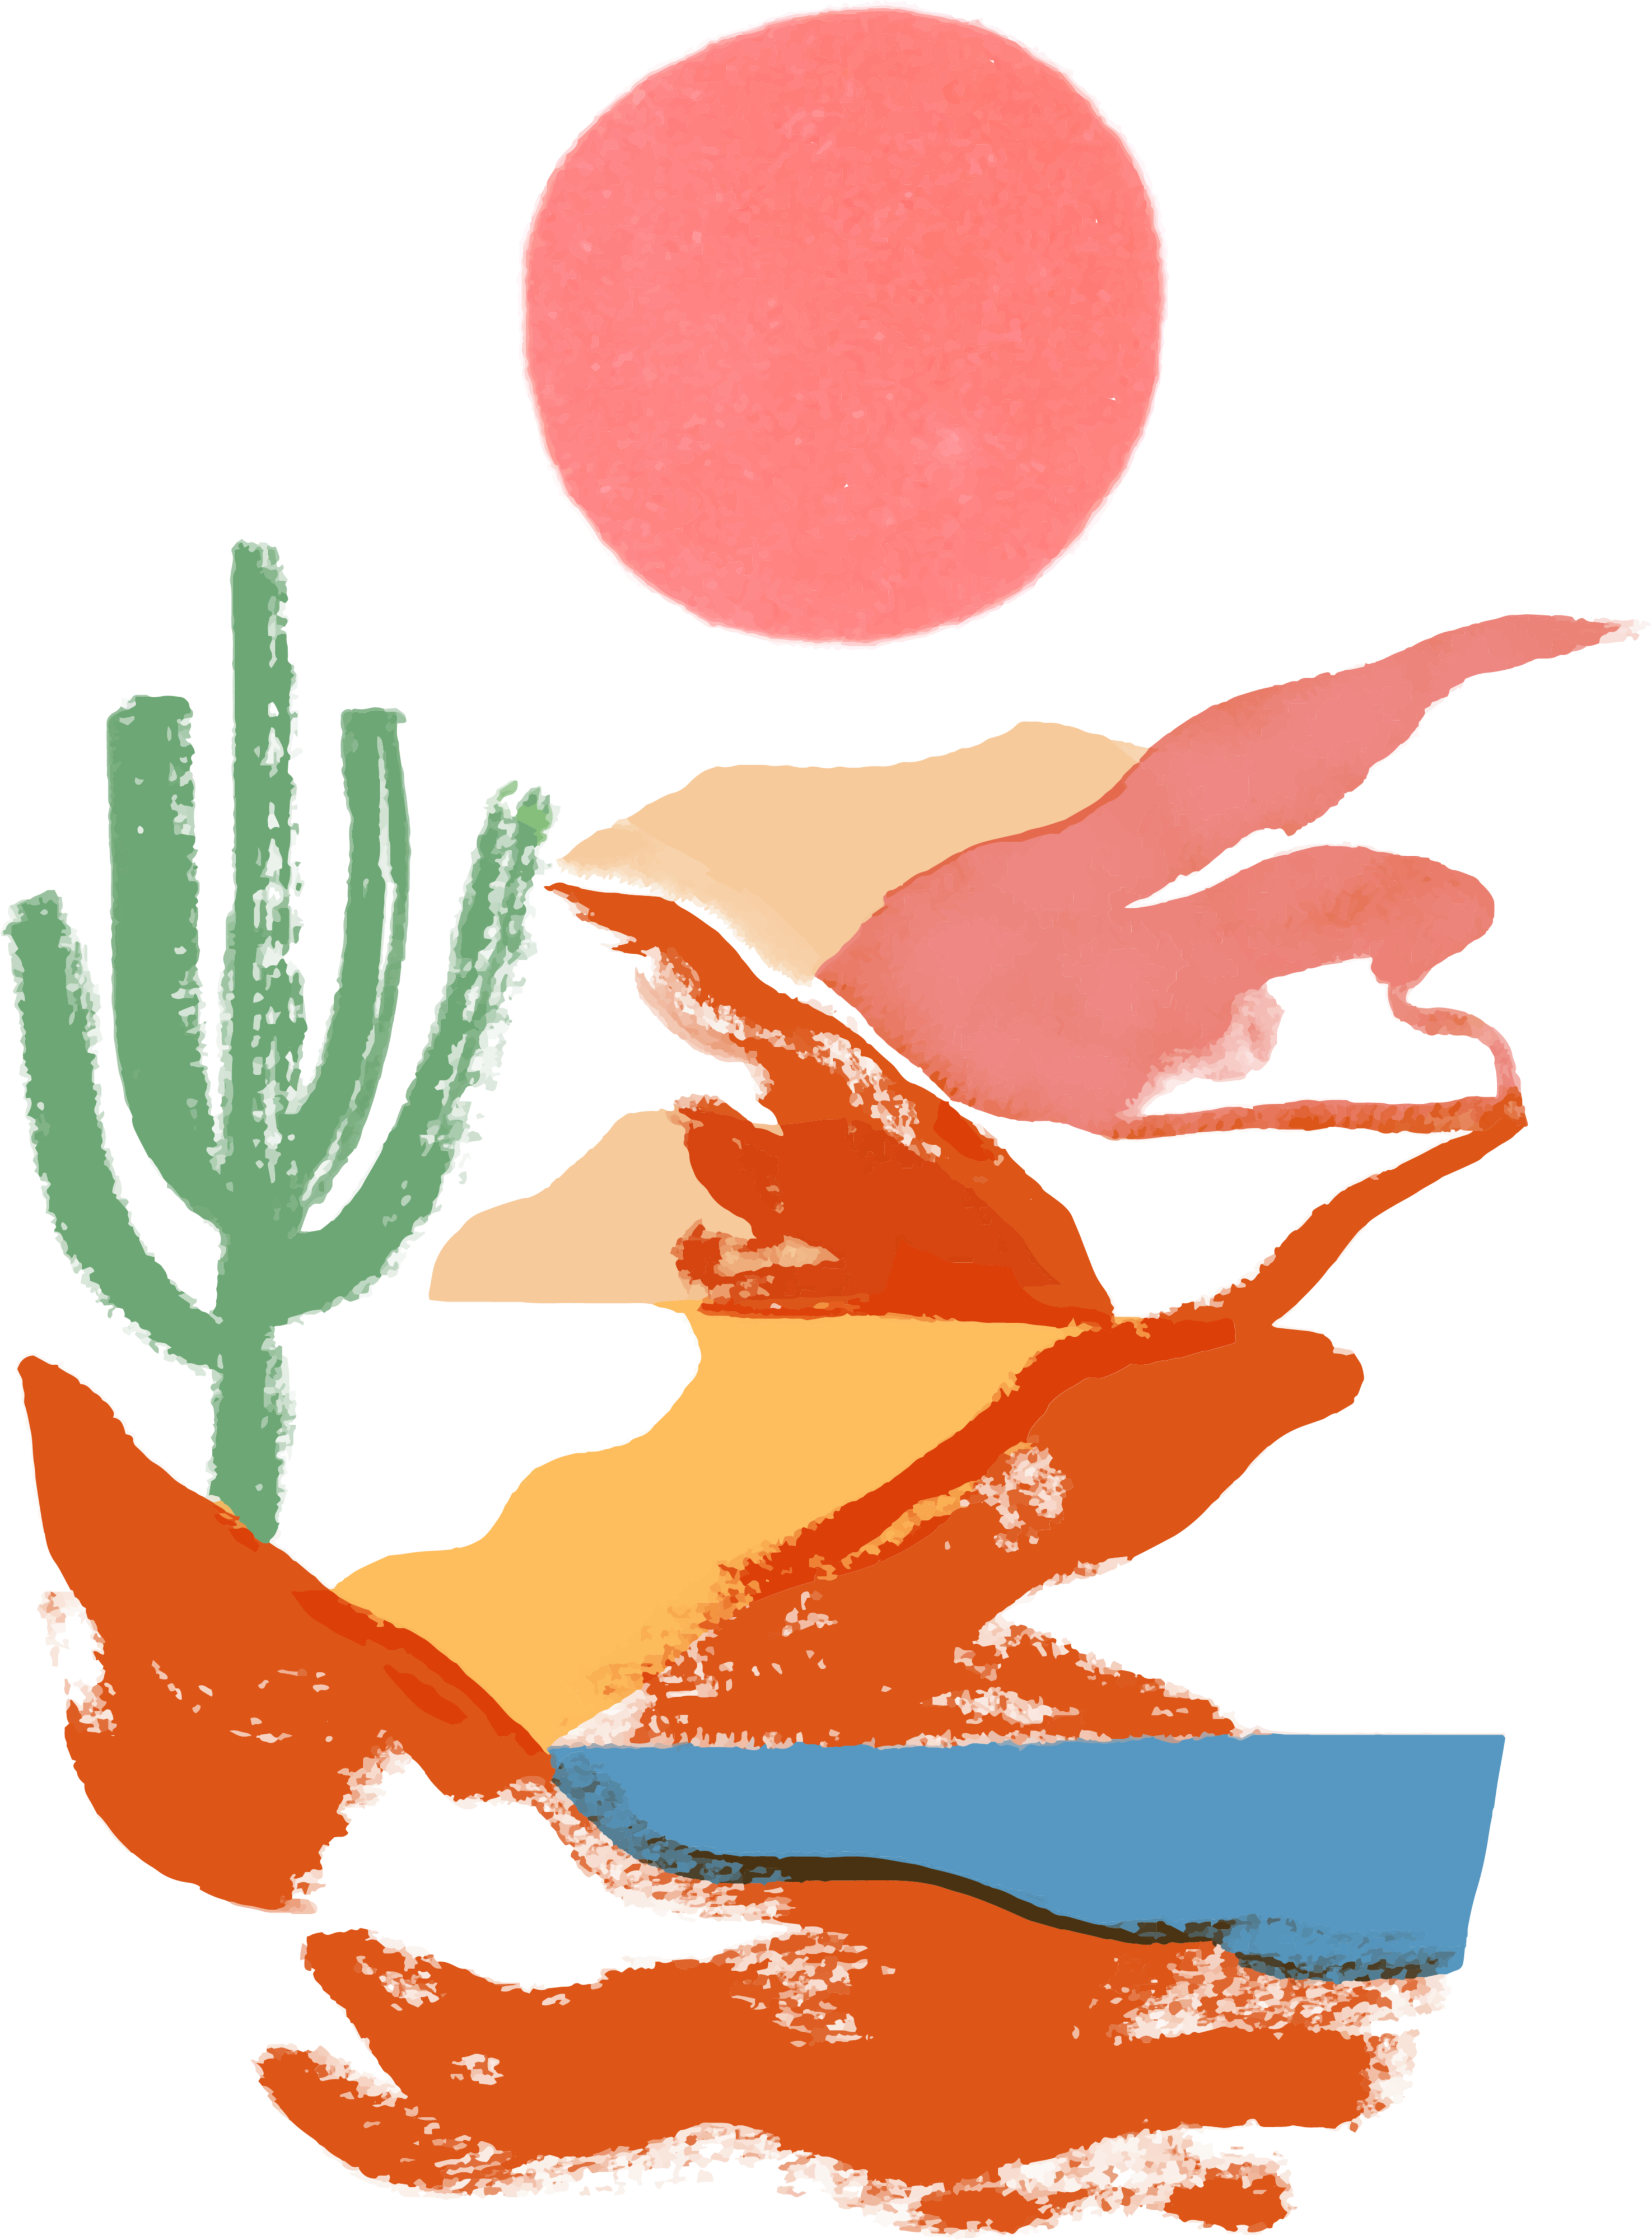 Desert and sea illustration